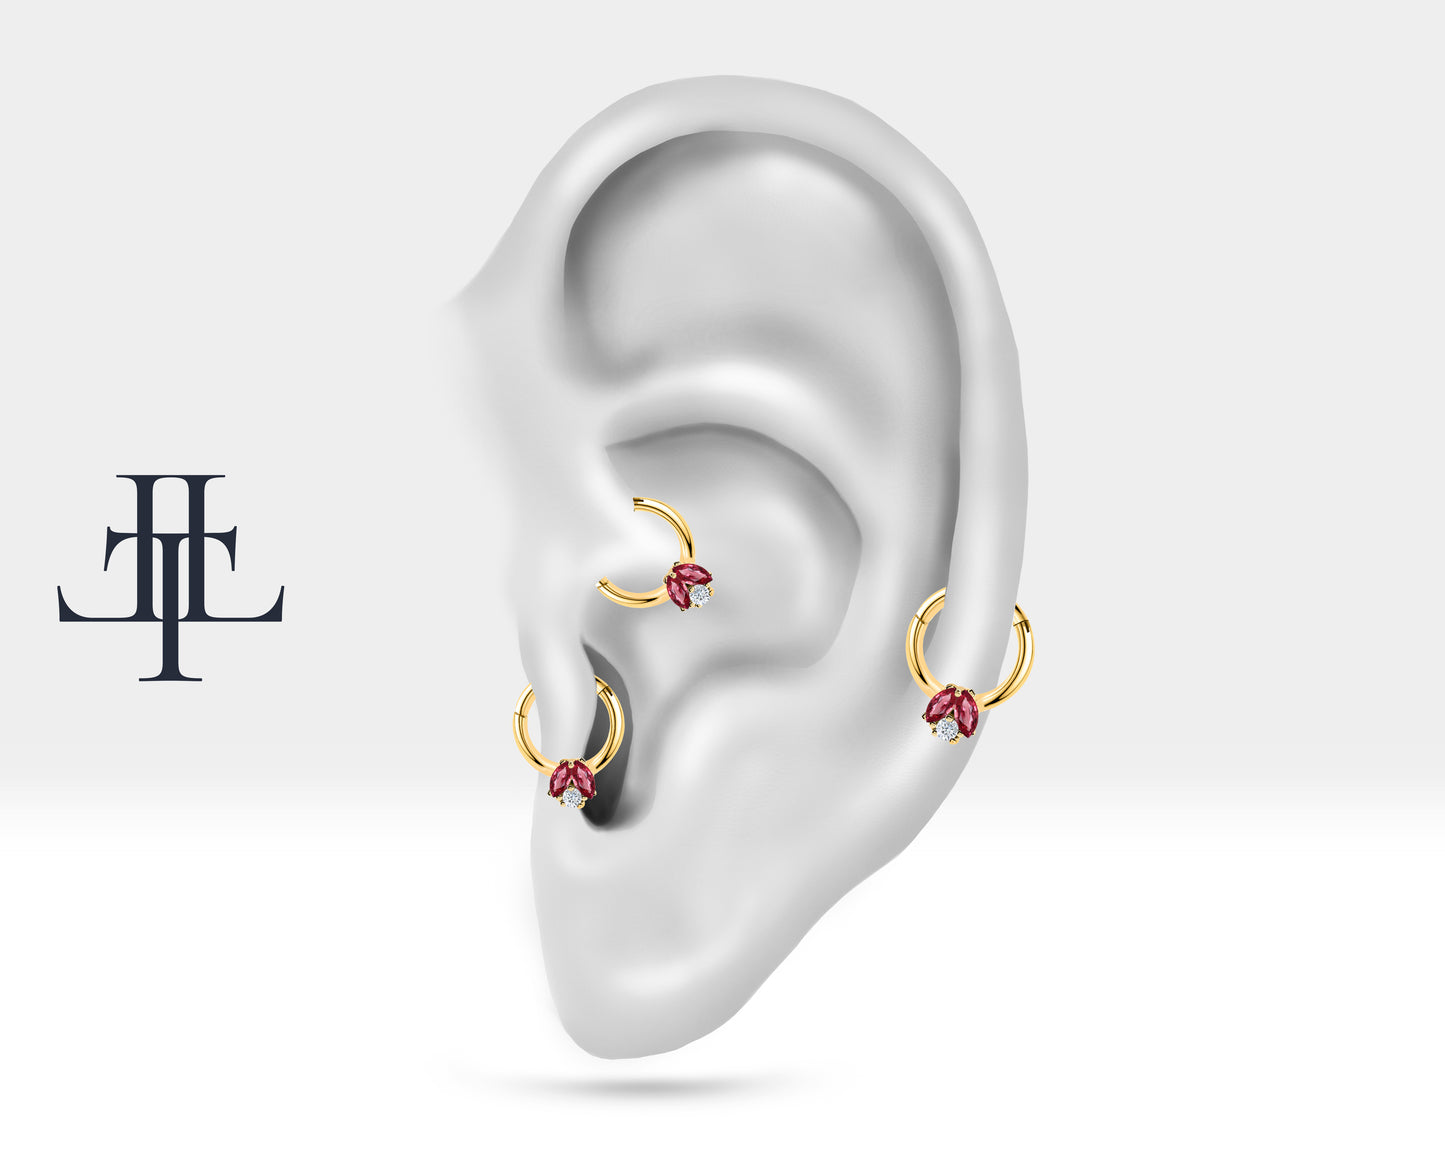 Cartilage Hoop Piercing Marquise Round Cut Ruby Diamond Single Earring 14K Gold,16G